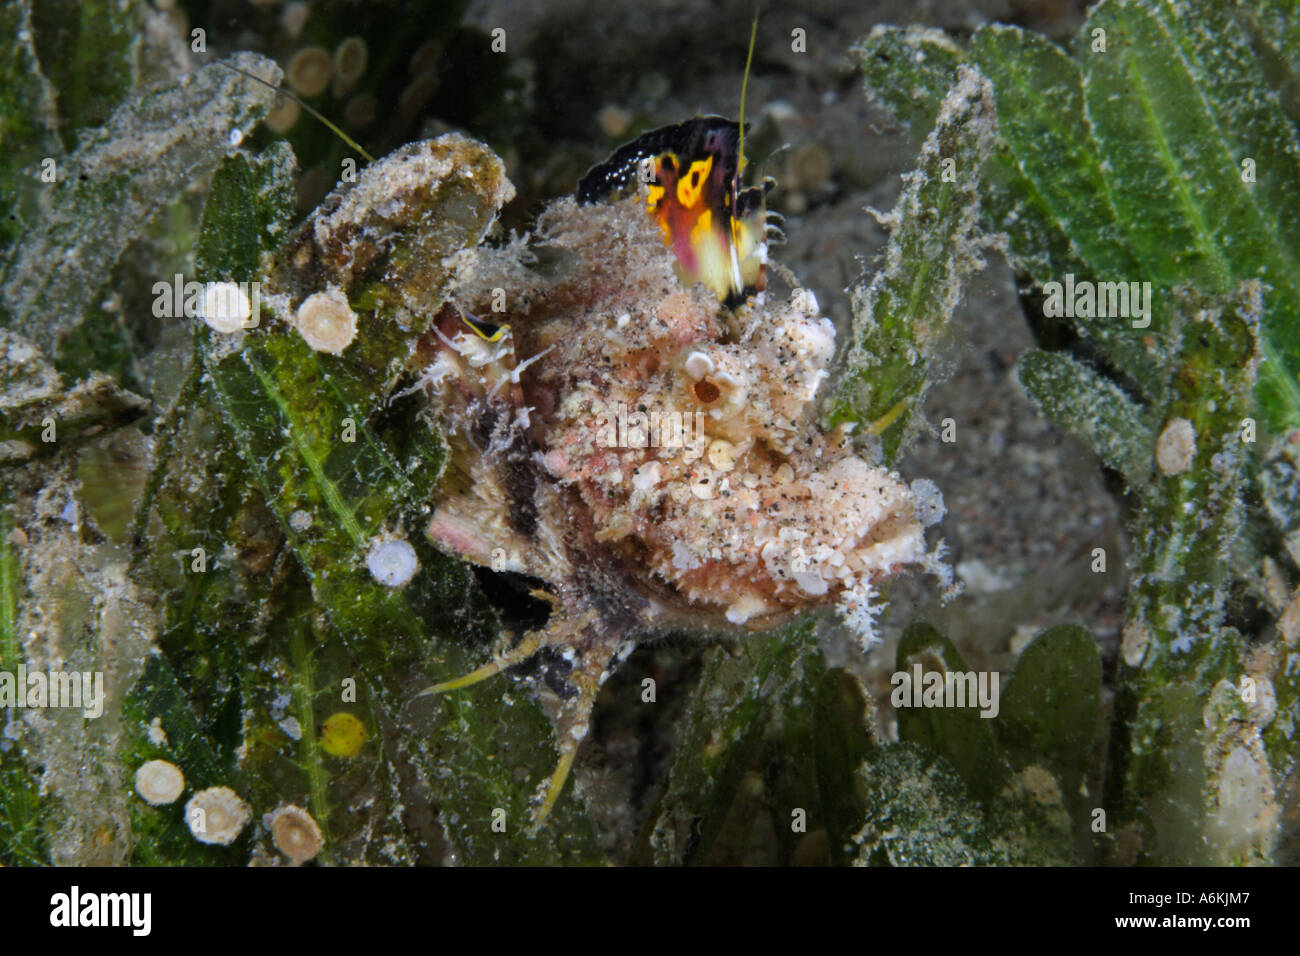 juvenile Filament devilfish under water Inimicus filamentosus Stock Photo